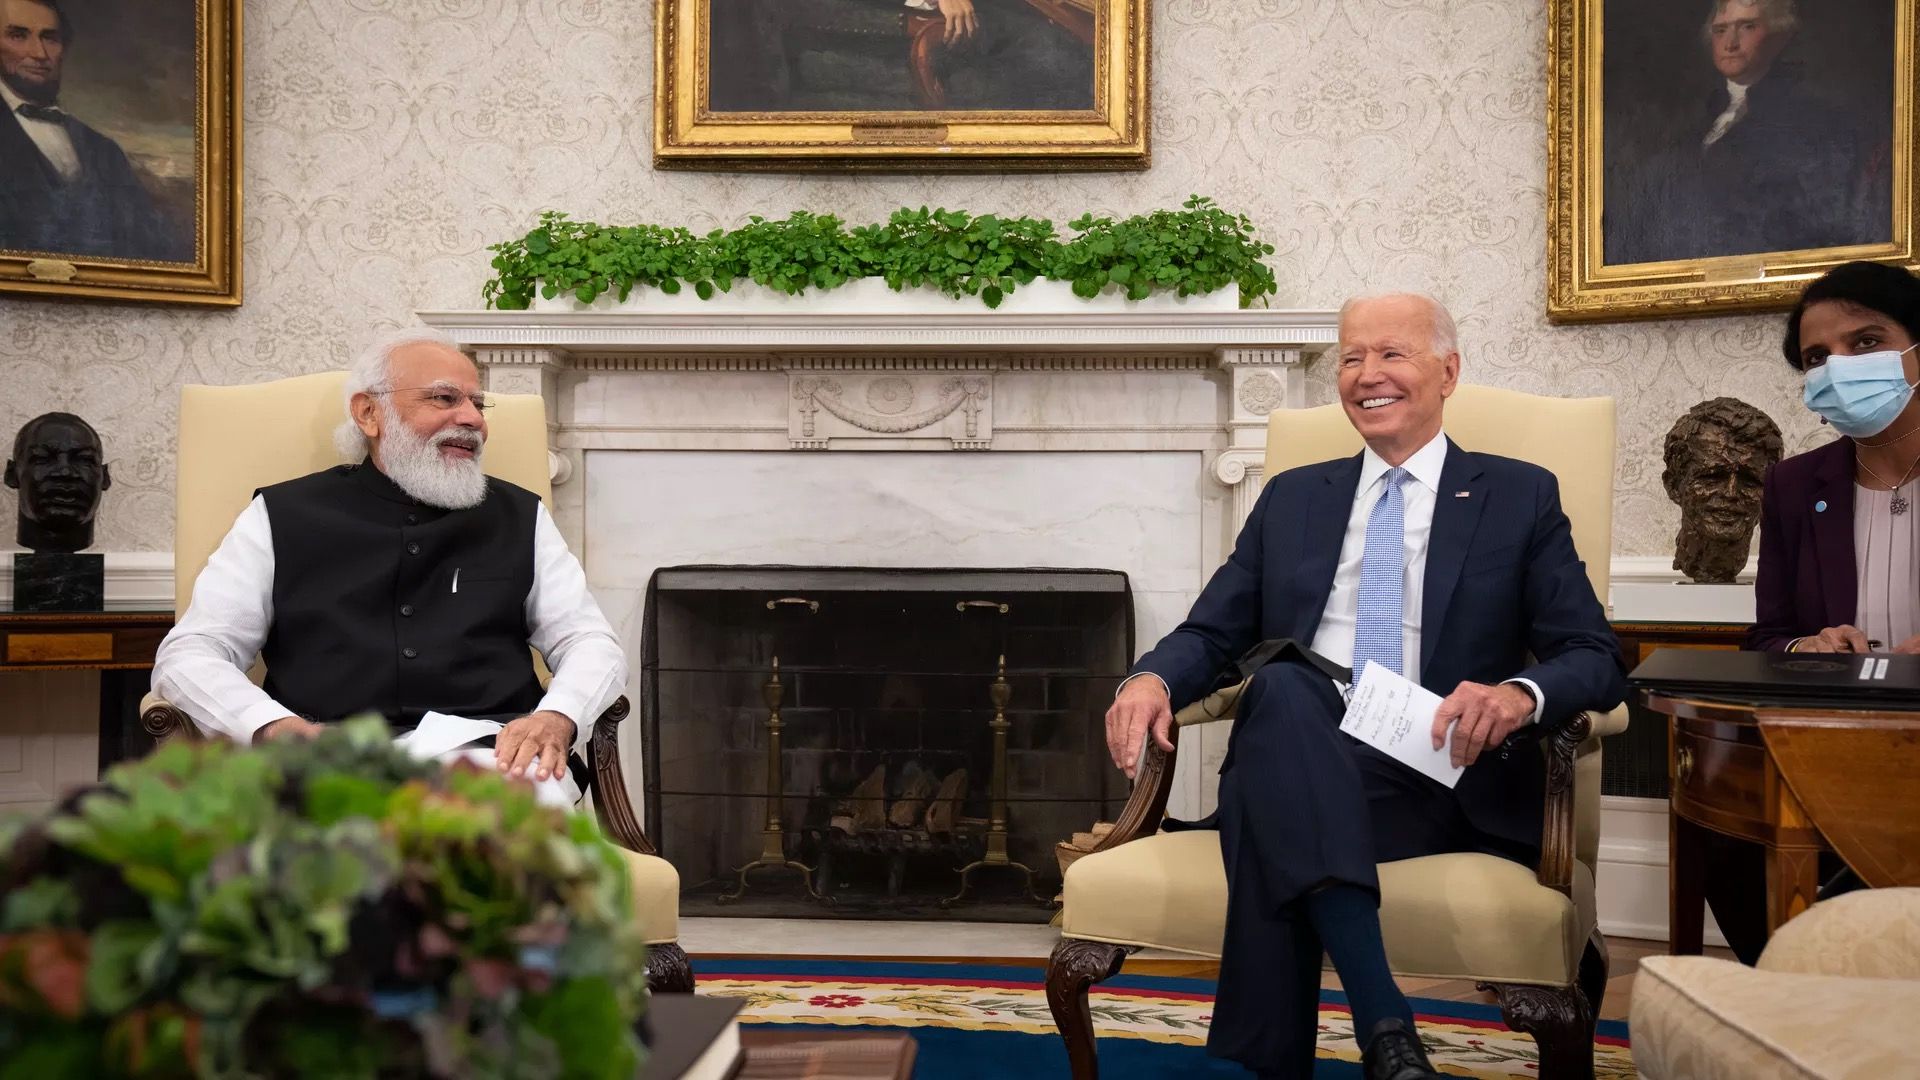 President Biden is seen hosting India Prime Minister Narenda Modi in the Oval Office.